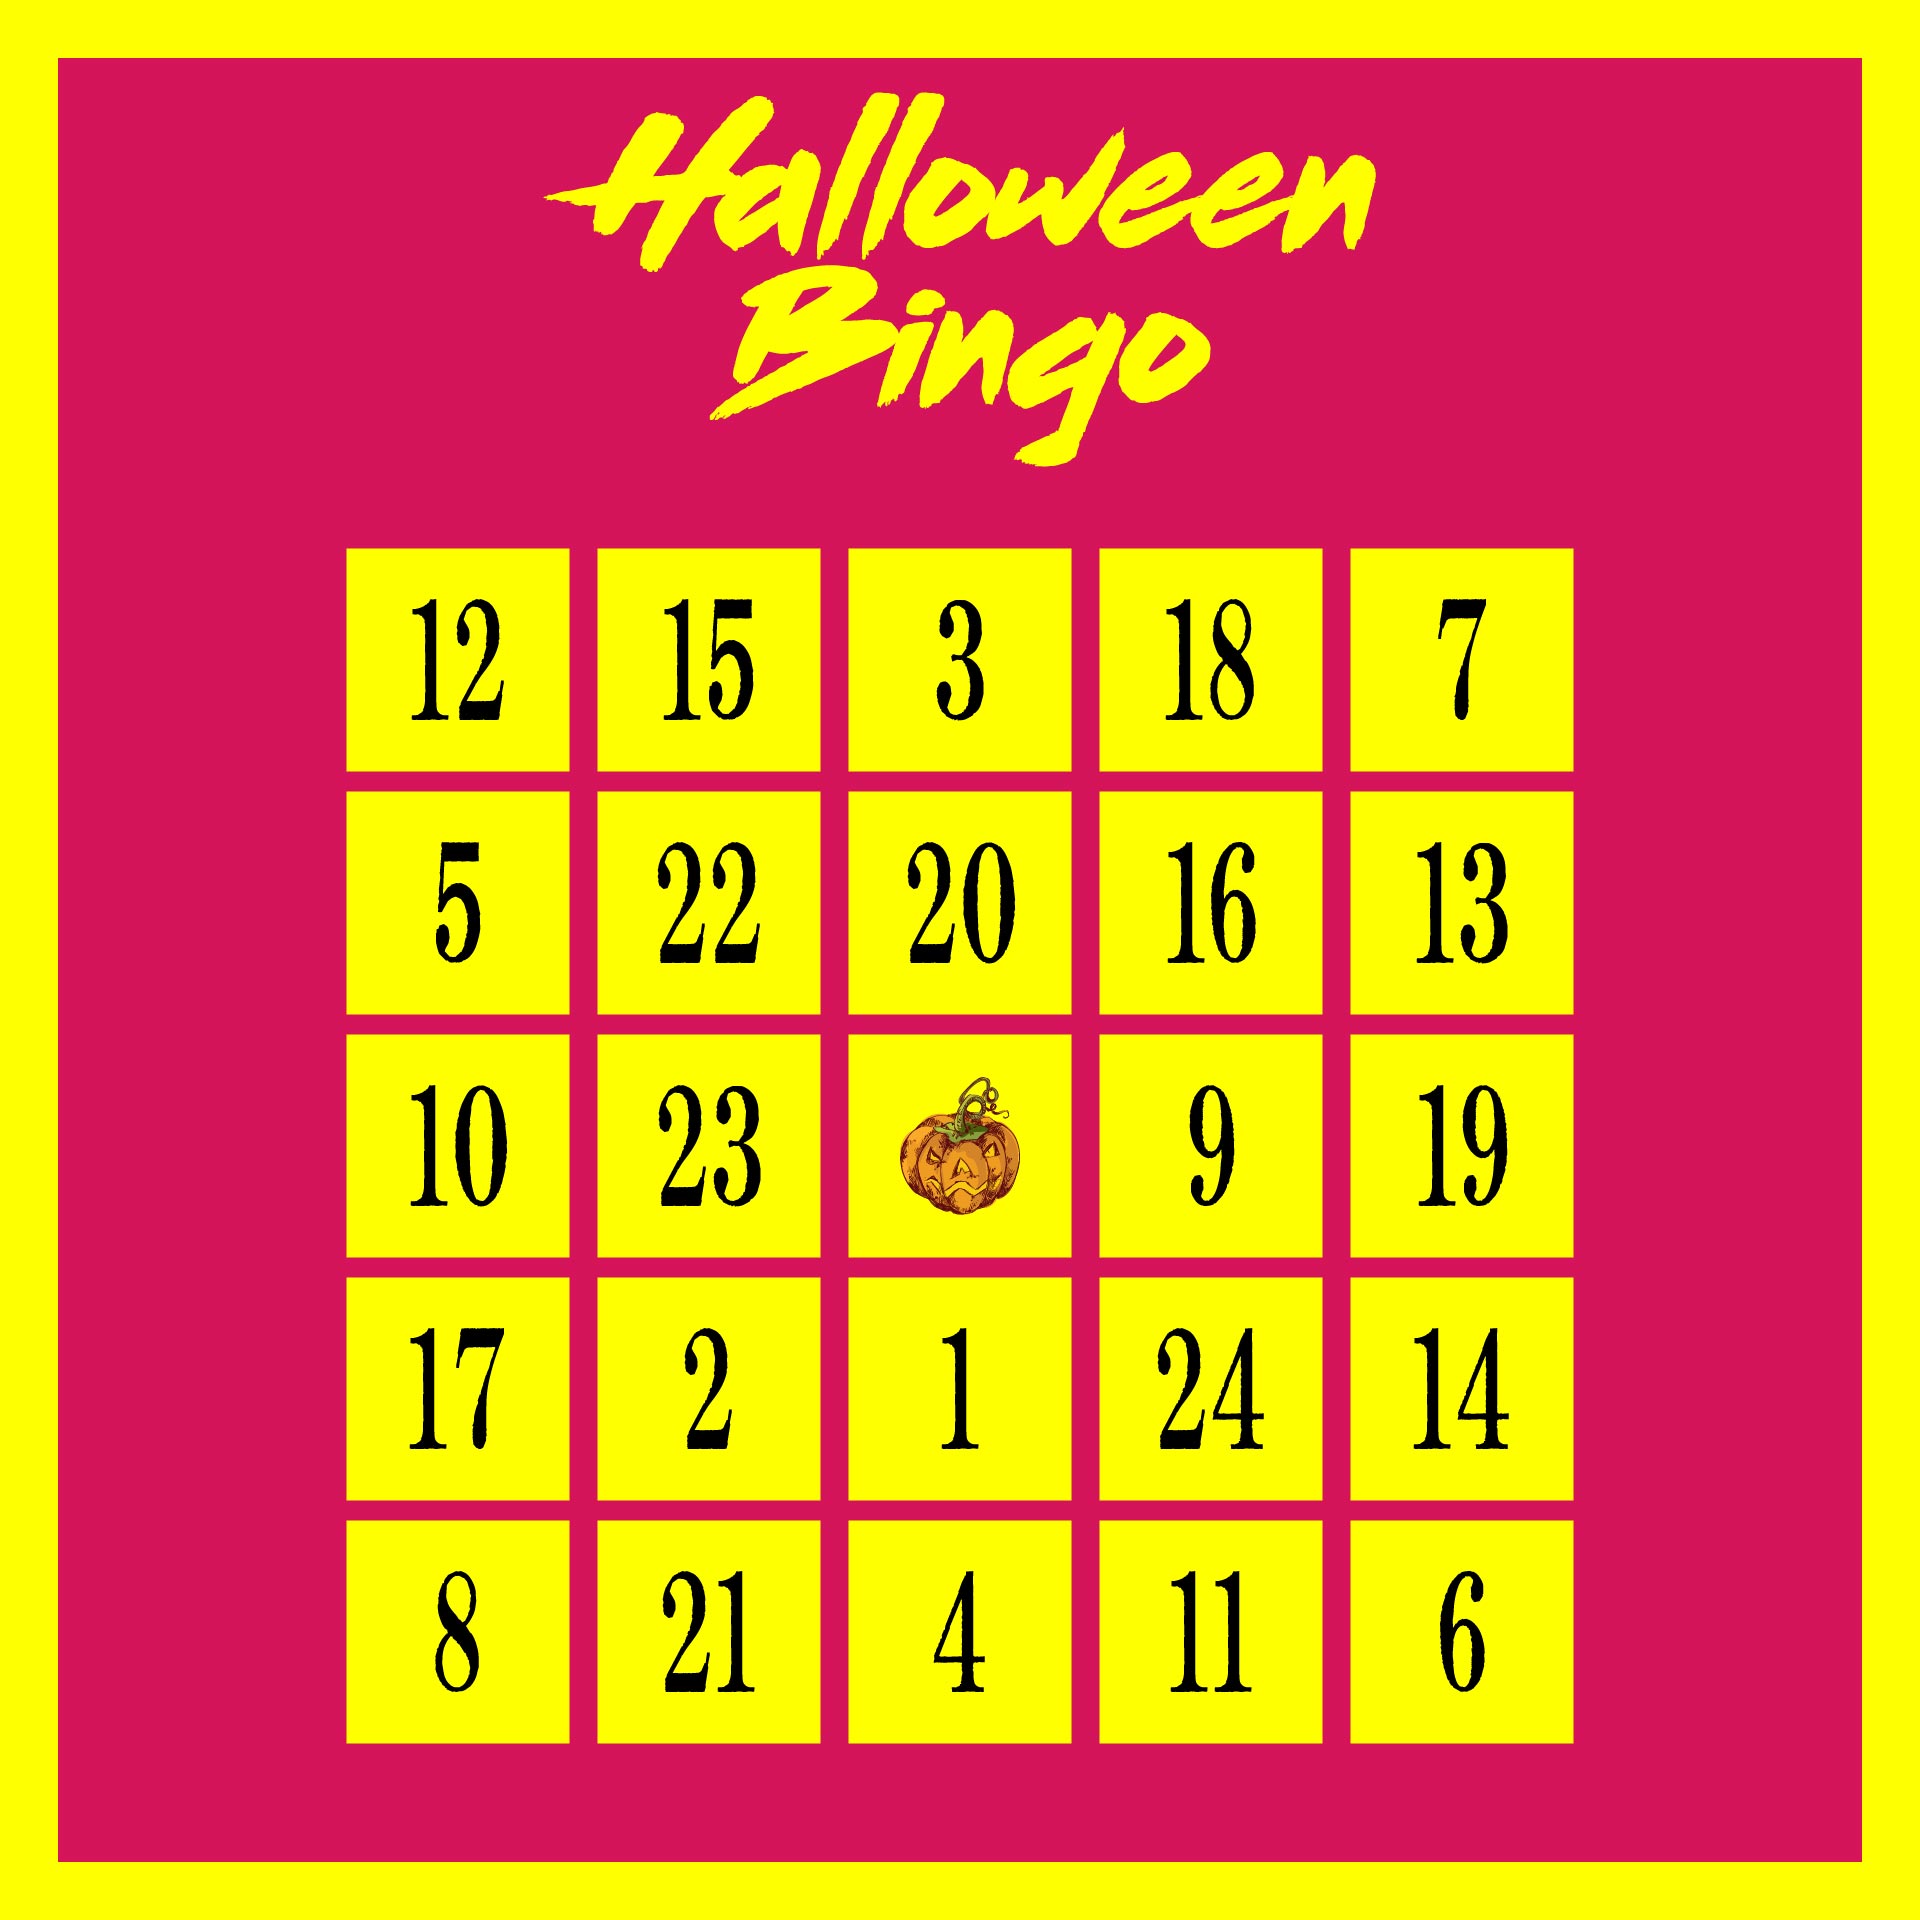 Printable Halloween Bingo Game Cards